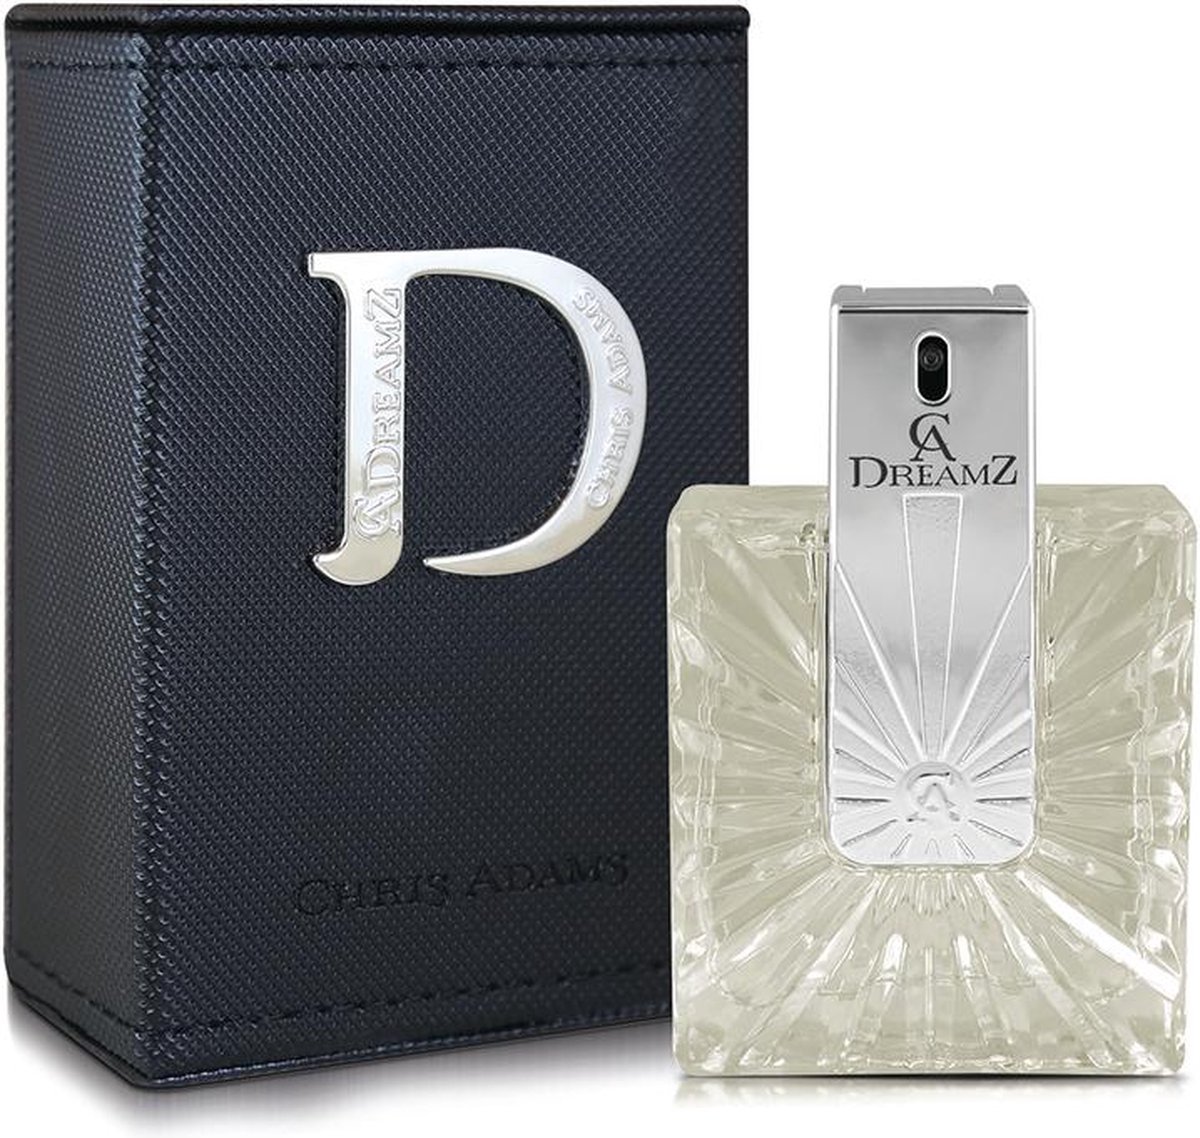 Chris Adams CA Dreamz Man Eau de Parfum 100ml - Parfum voor mannen